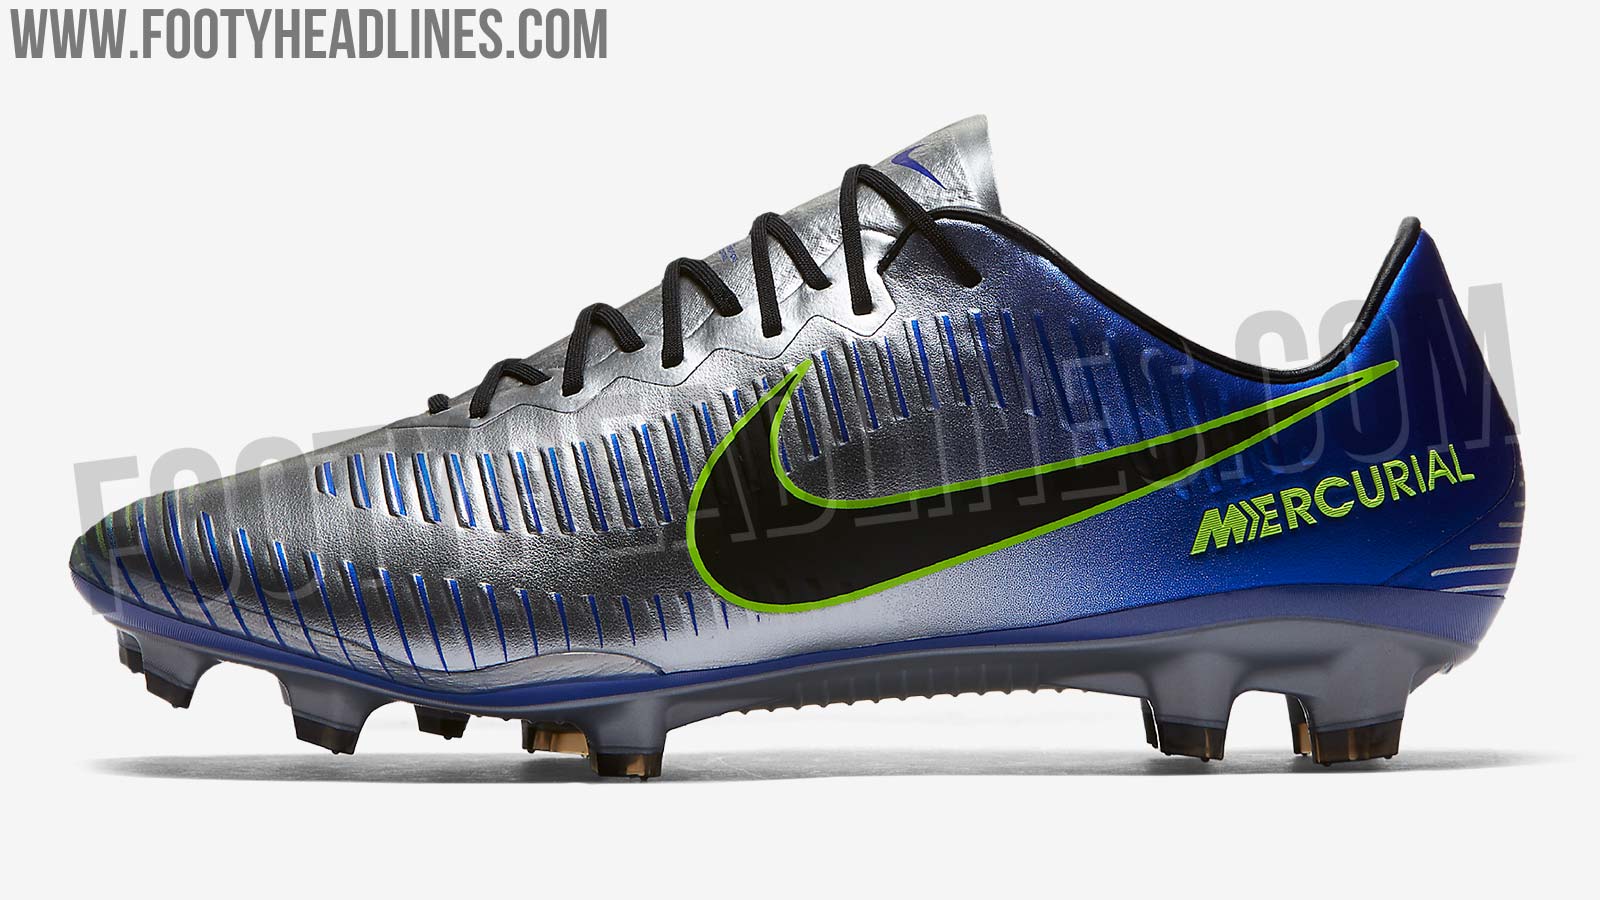 Nike Mercurial Neymar Puro Signature Boots - Footy